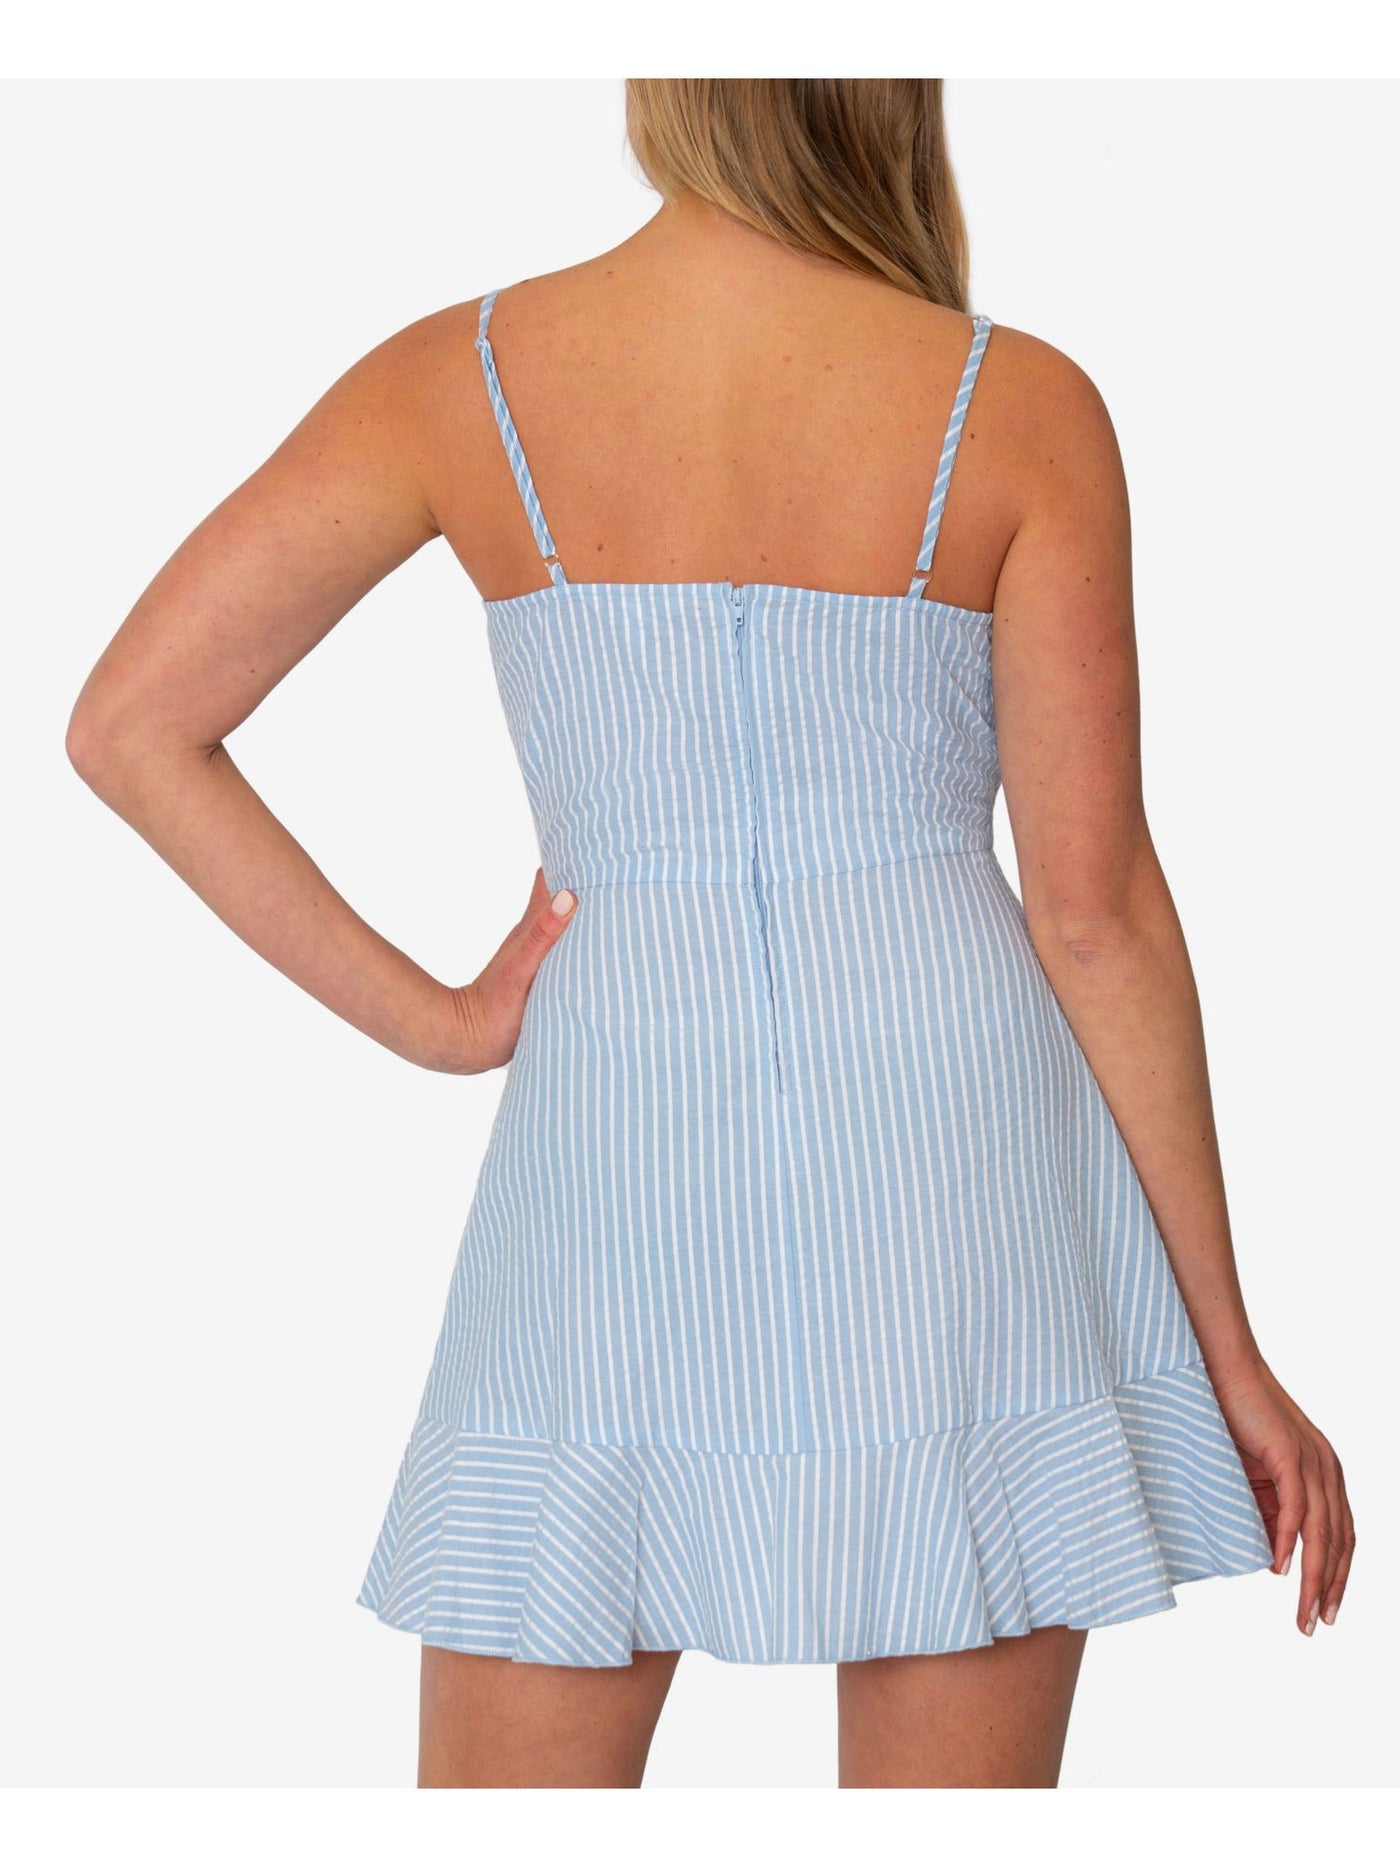 SPEECHLESS Womens Light Blue Ruffled Textured Zippered Striped Spaghetti Strap Surplice Neckline Mini Sheath Dress Juniors L